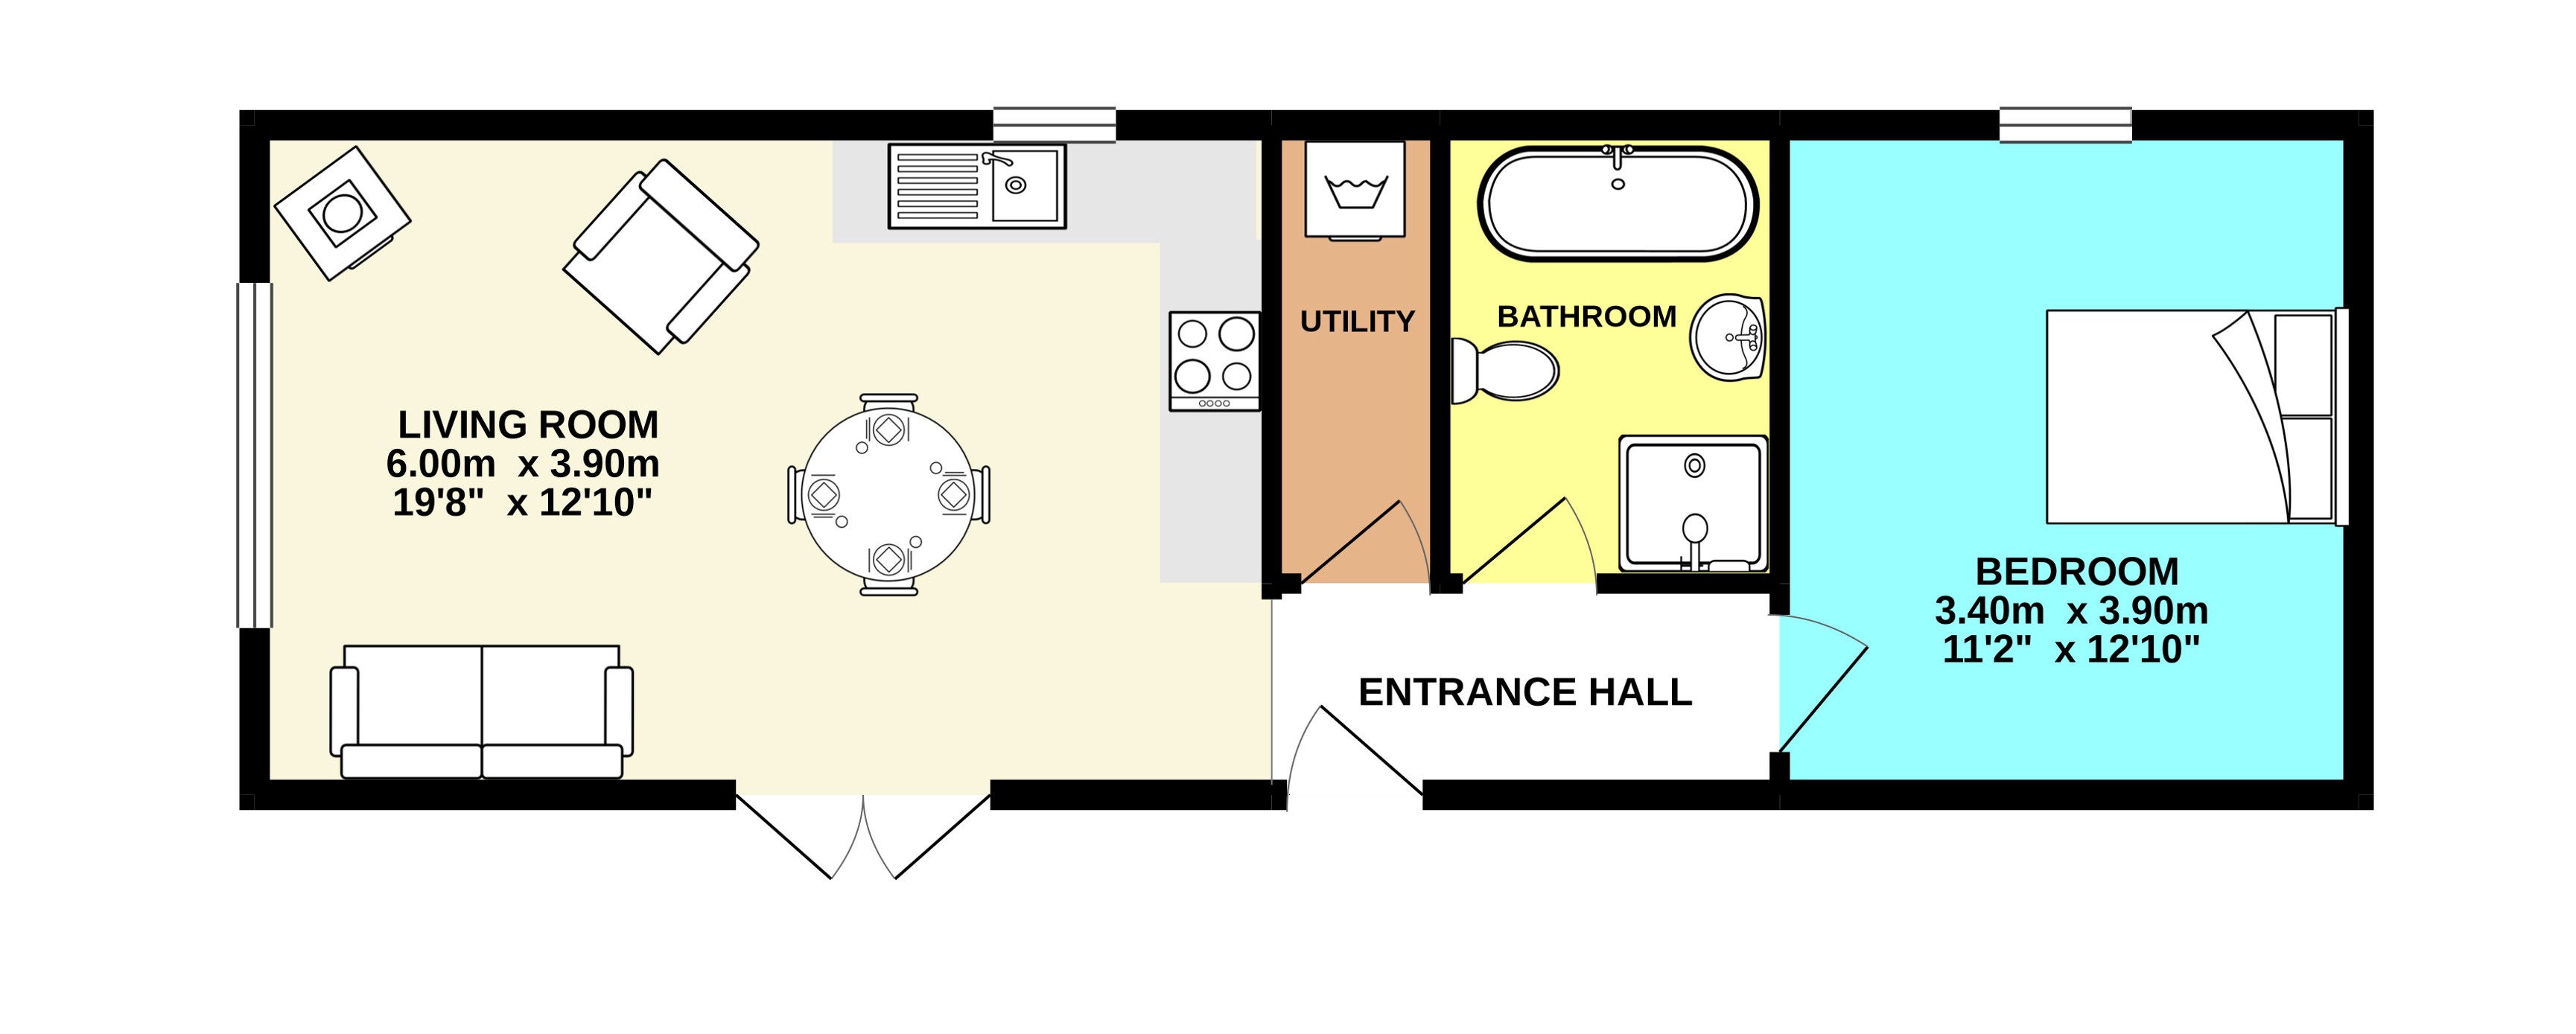 Accommodation Floorplan